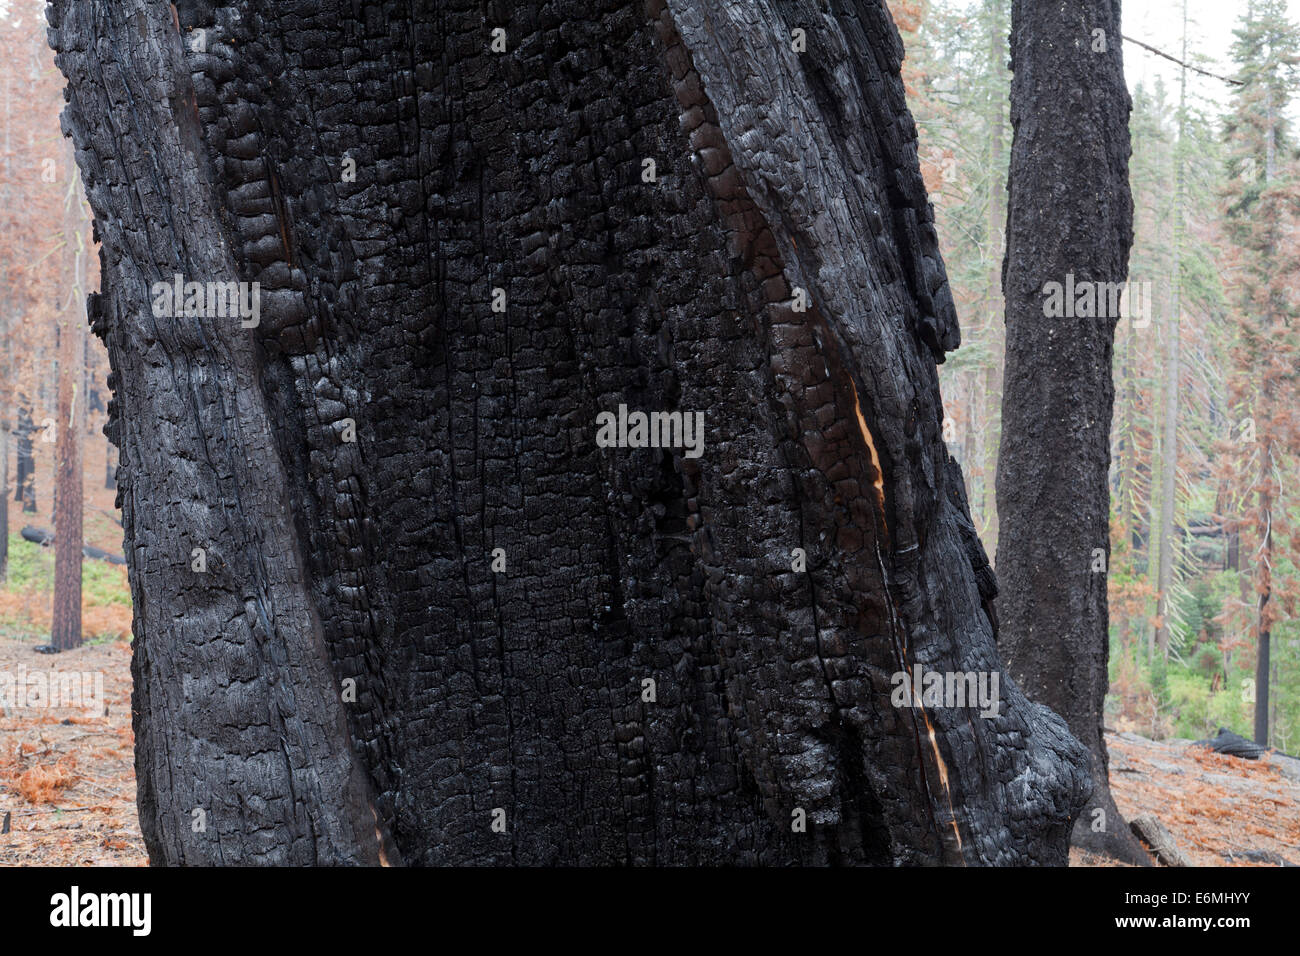 Charred forest tree trunks - Sierra Nevada mountains, California USA Stock Photo